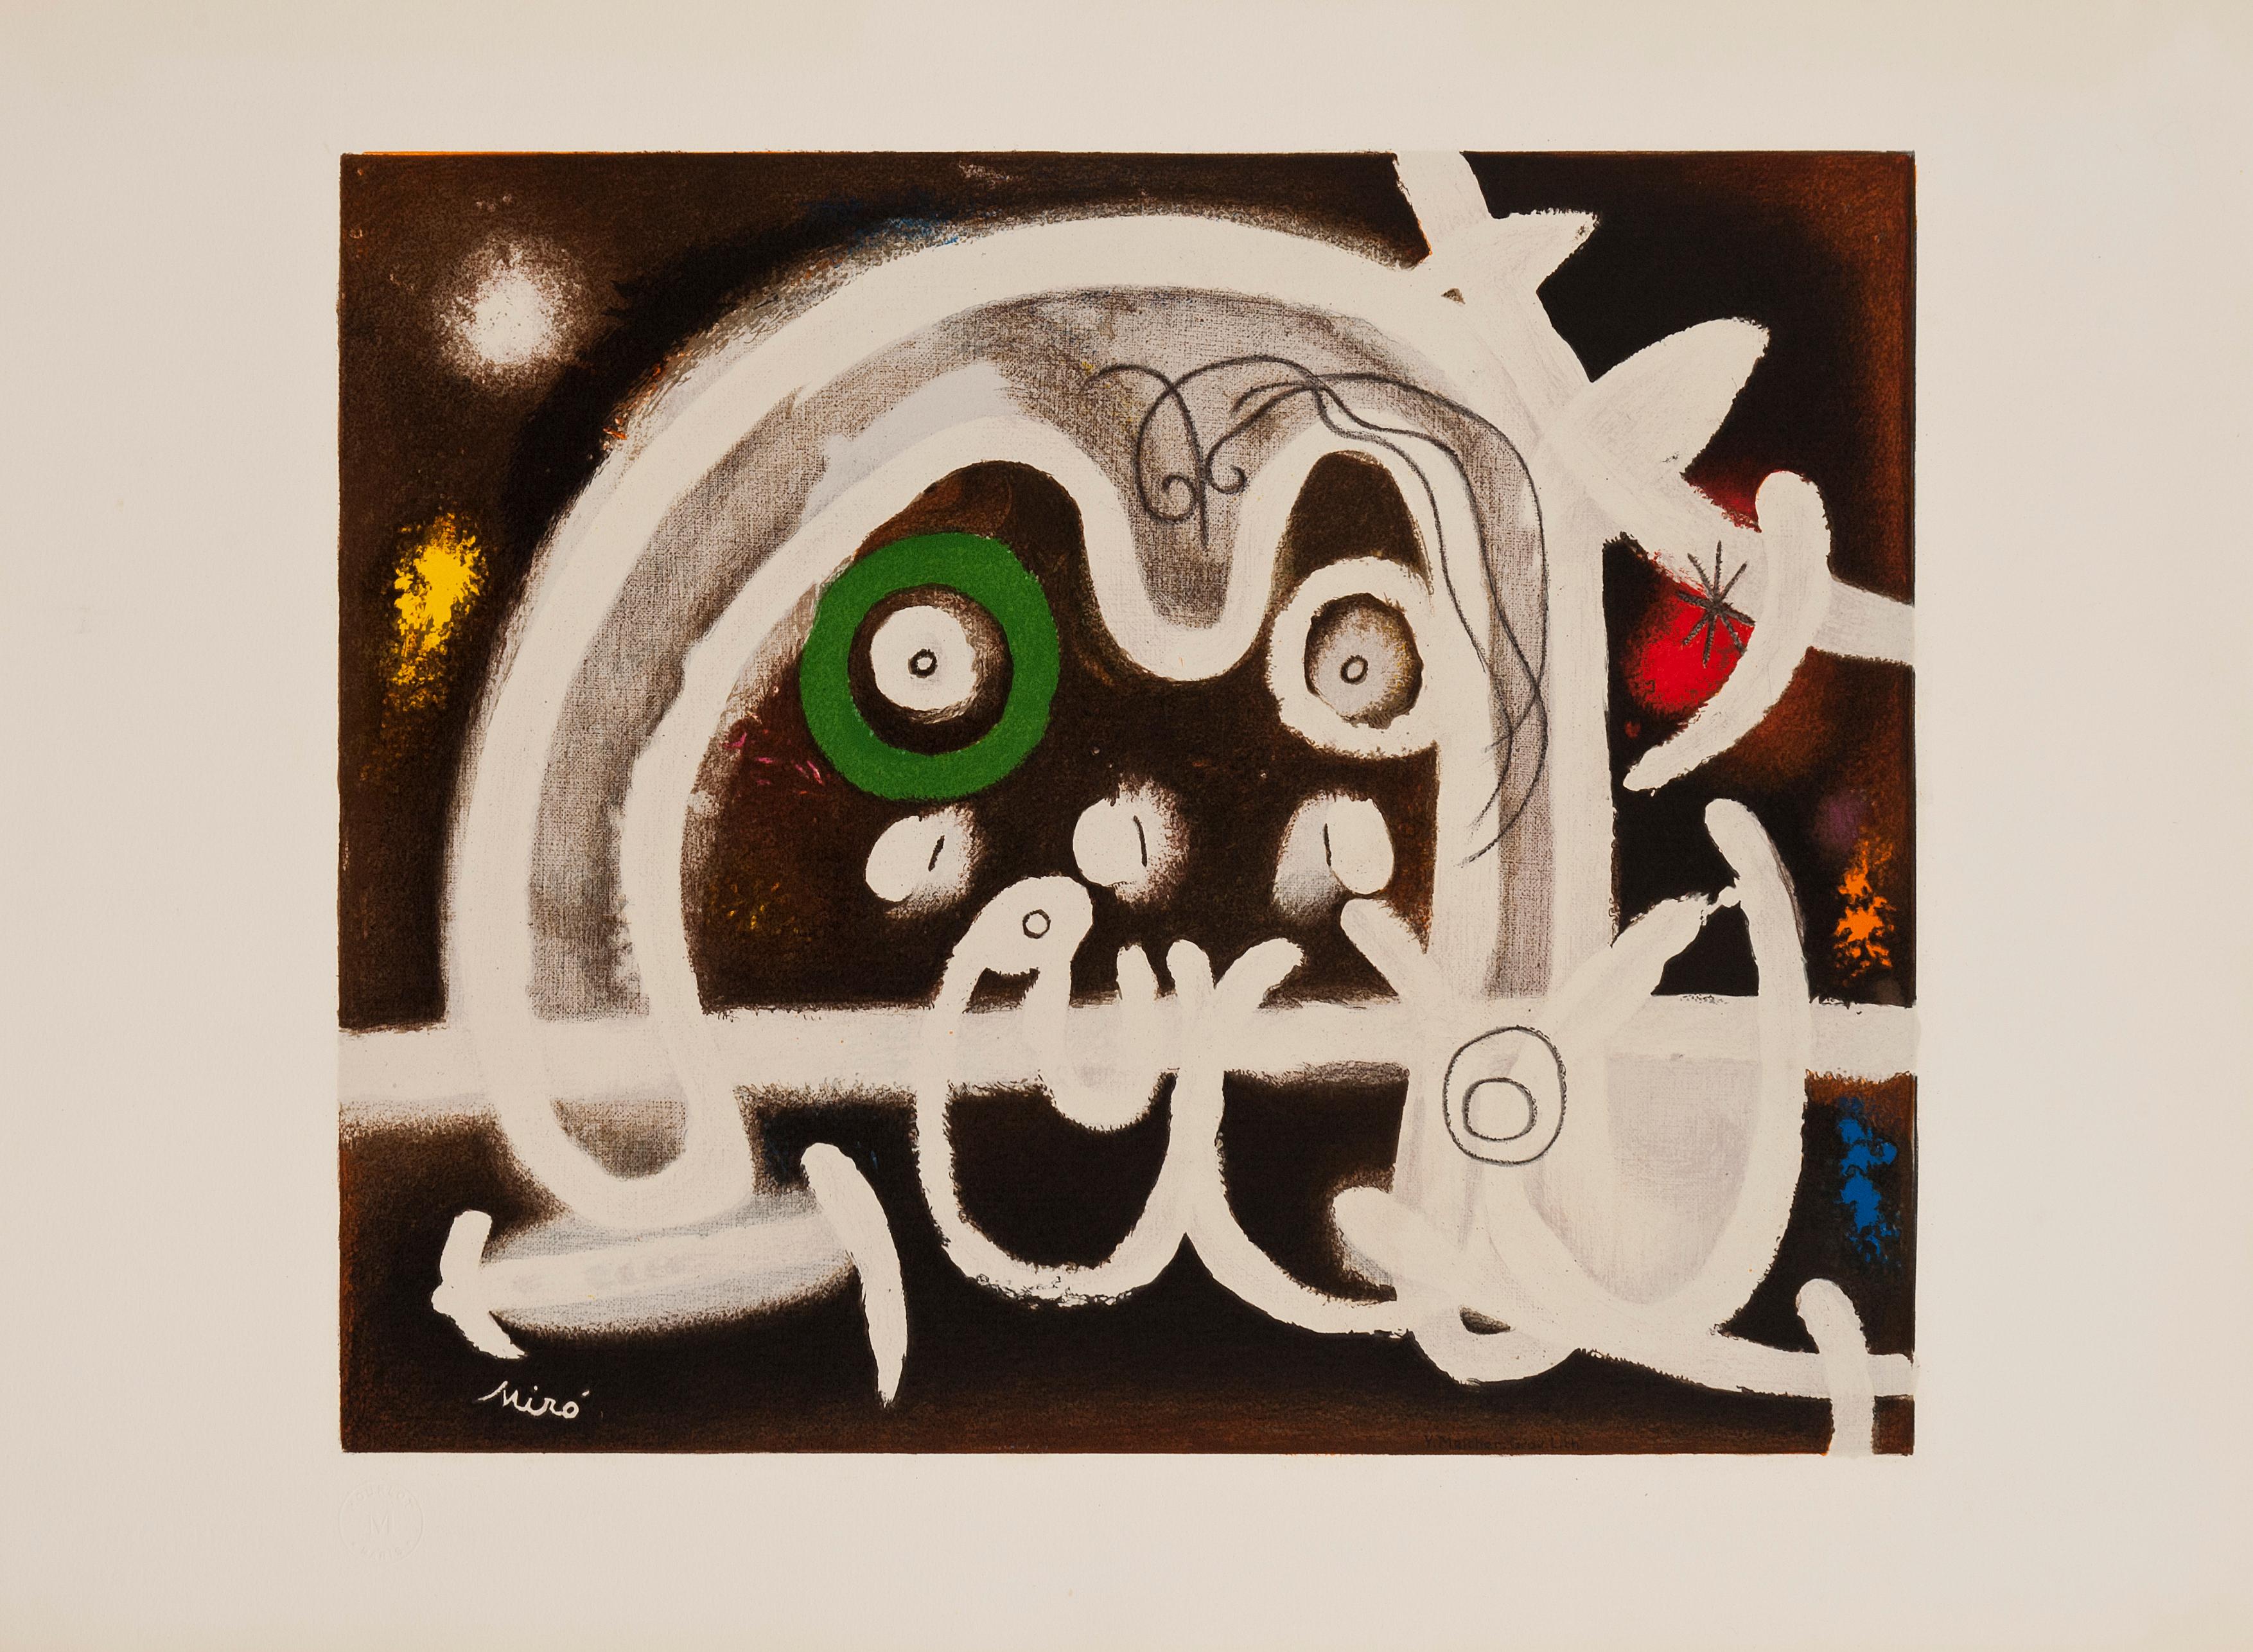 Joan Miró Abstract Print – Personnage et Oiseau von Joan Miro (abstrakter Druck), 1984